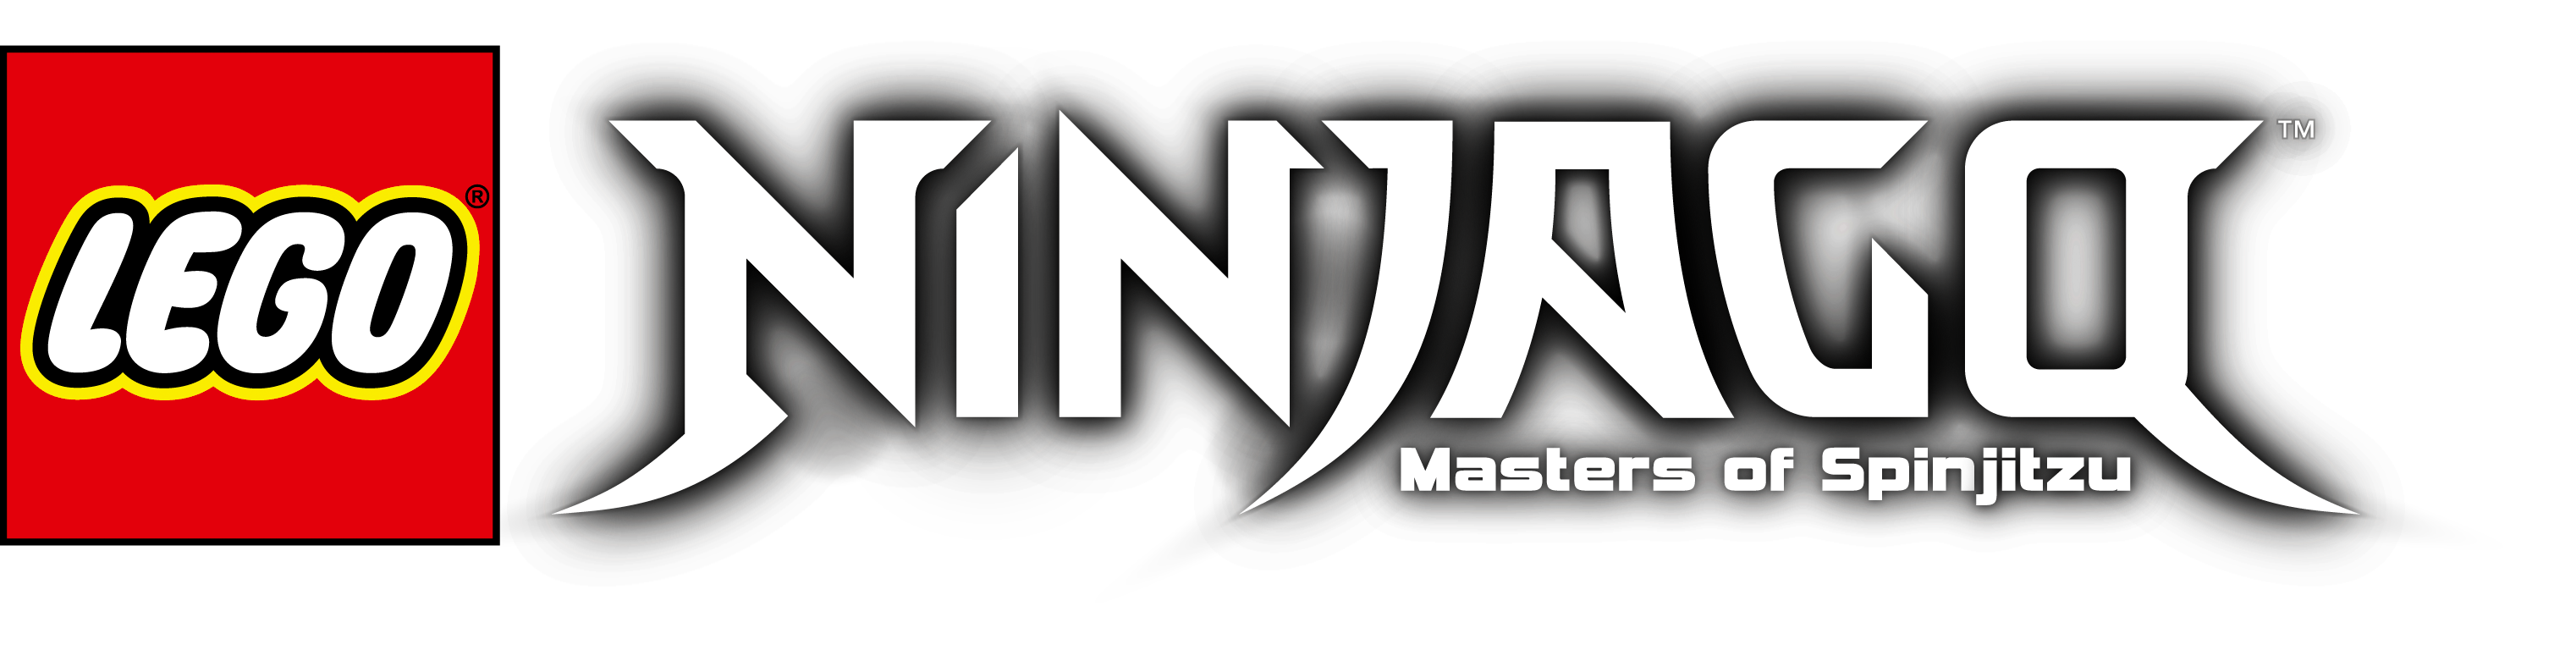 Lego Movie Brand Ninjago Game Nindroids Video PNG Image